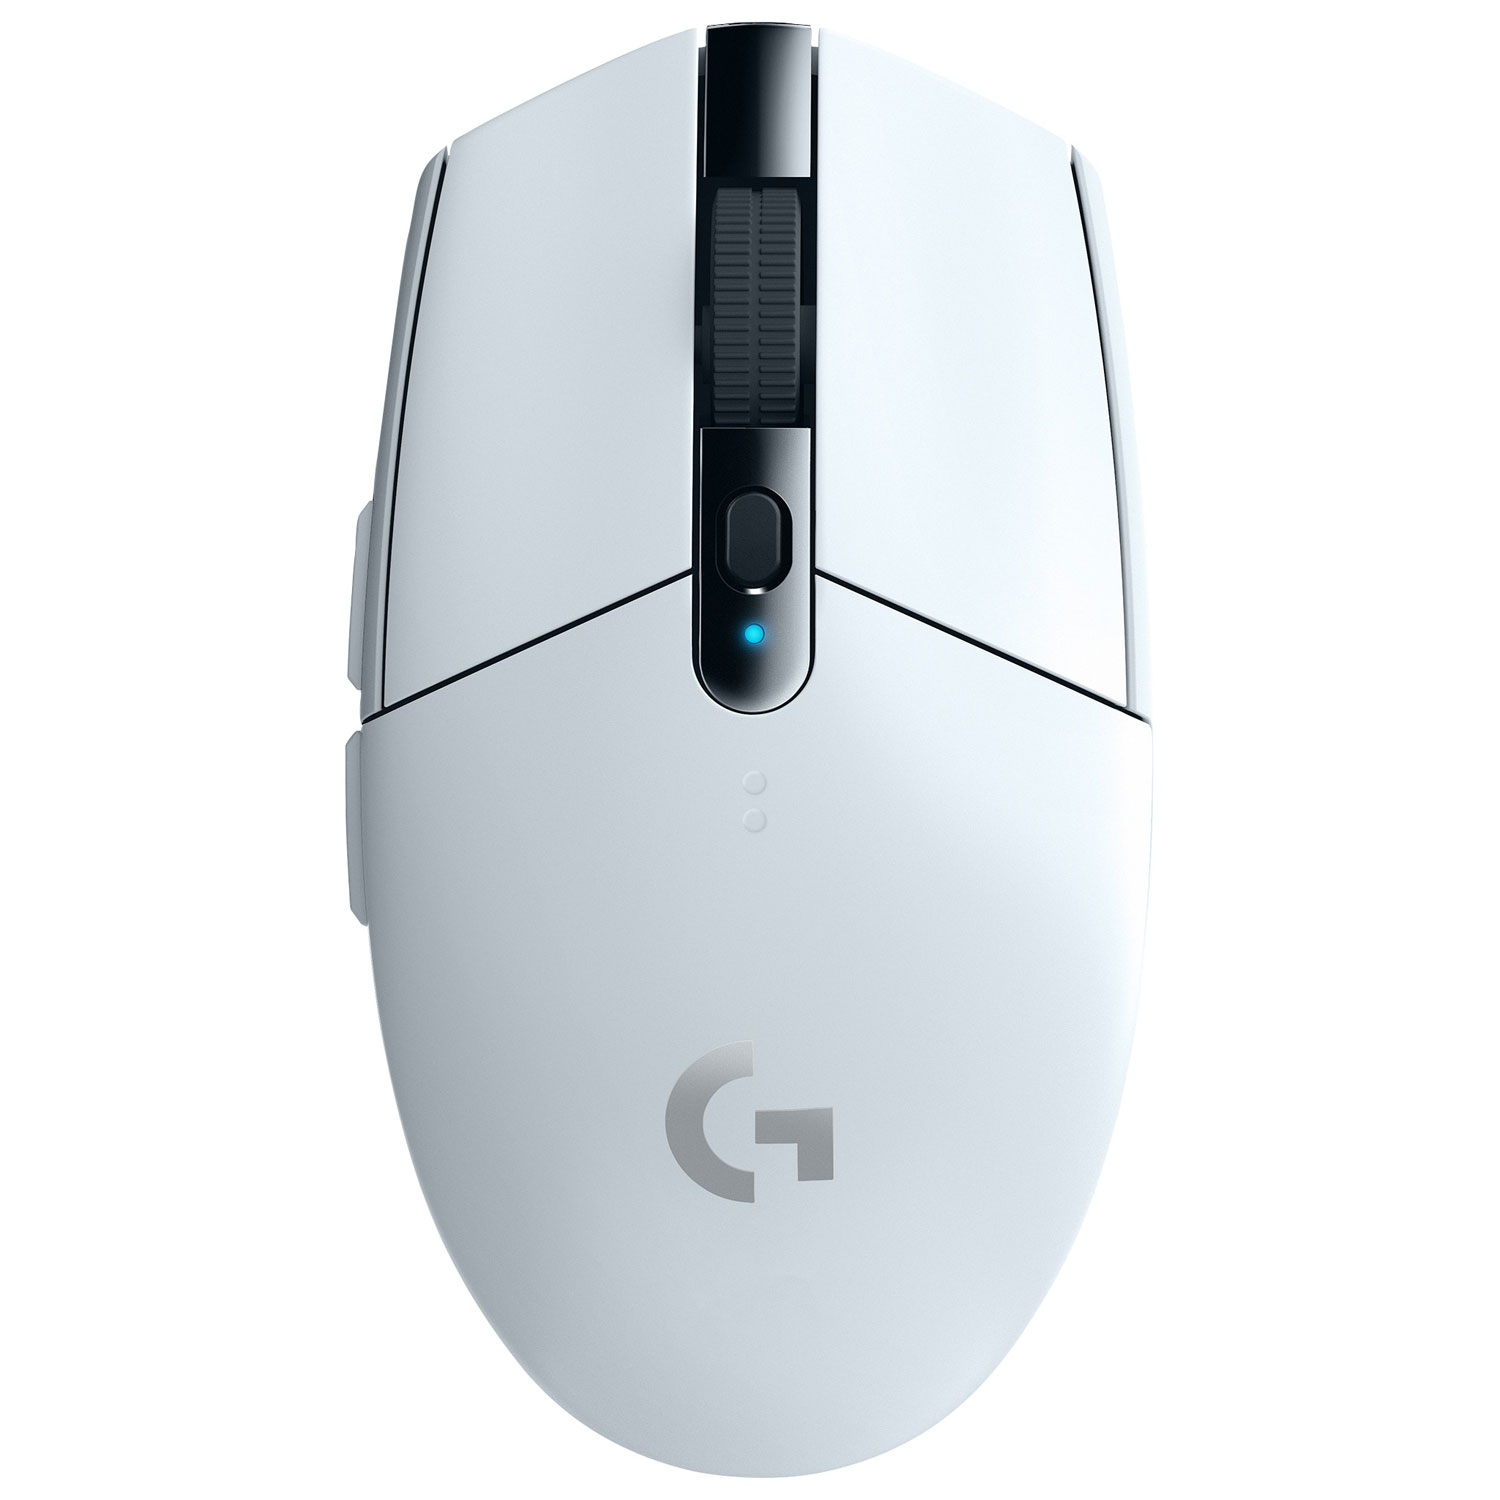 Logitech G305 12000 DPI Wireless Optical Gaming Mouse - White